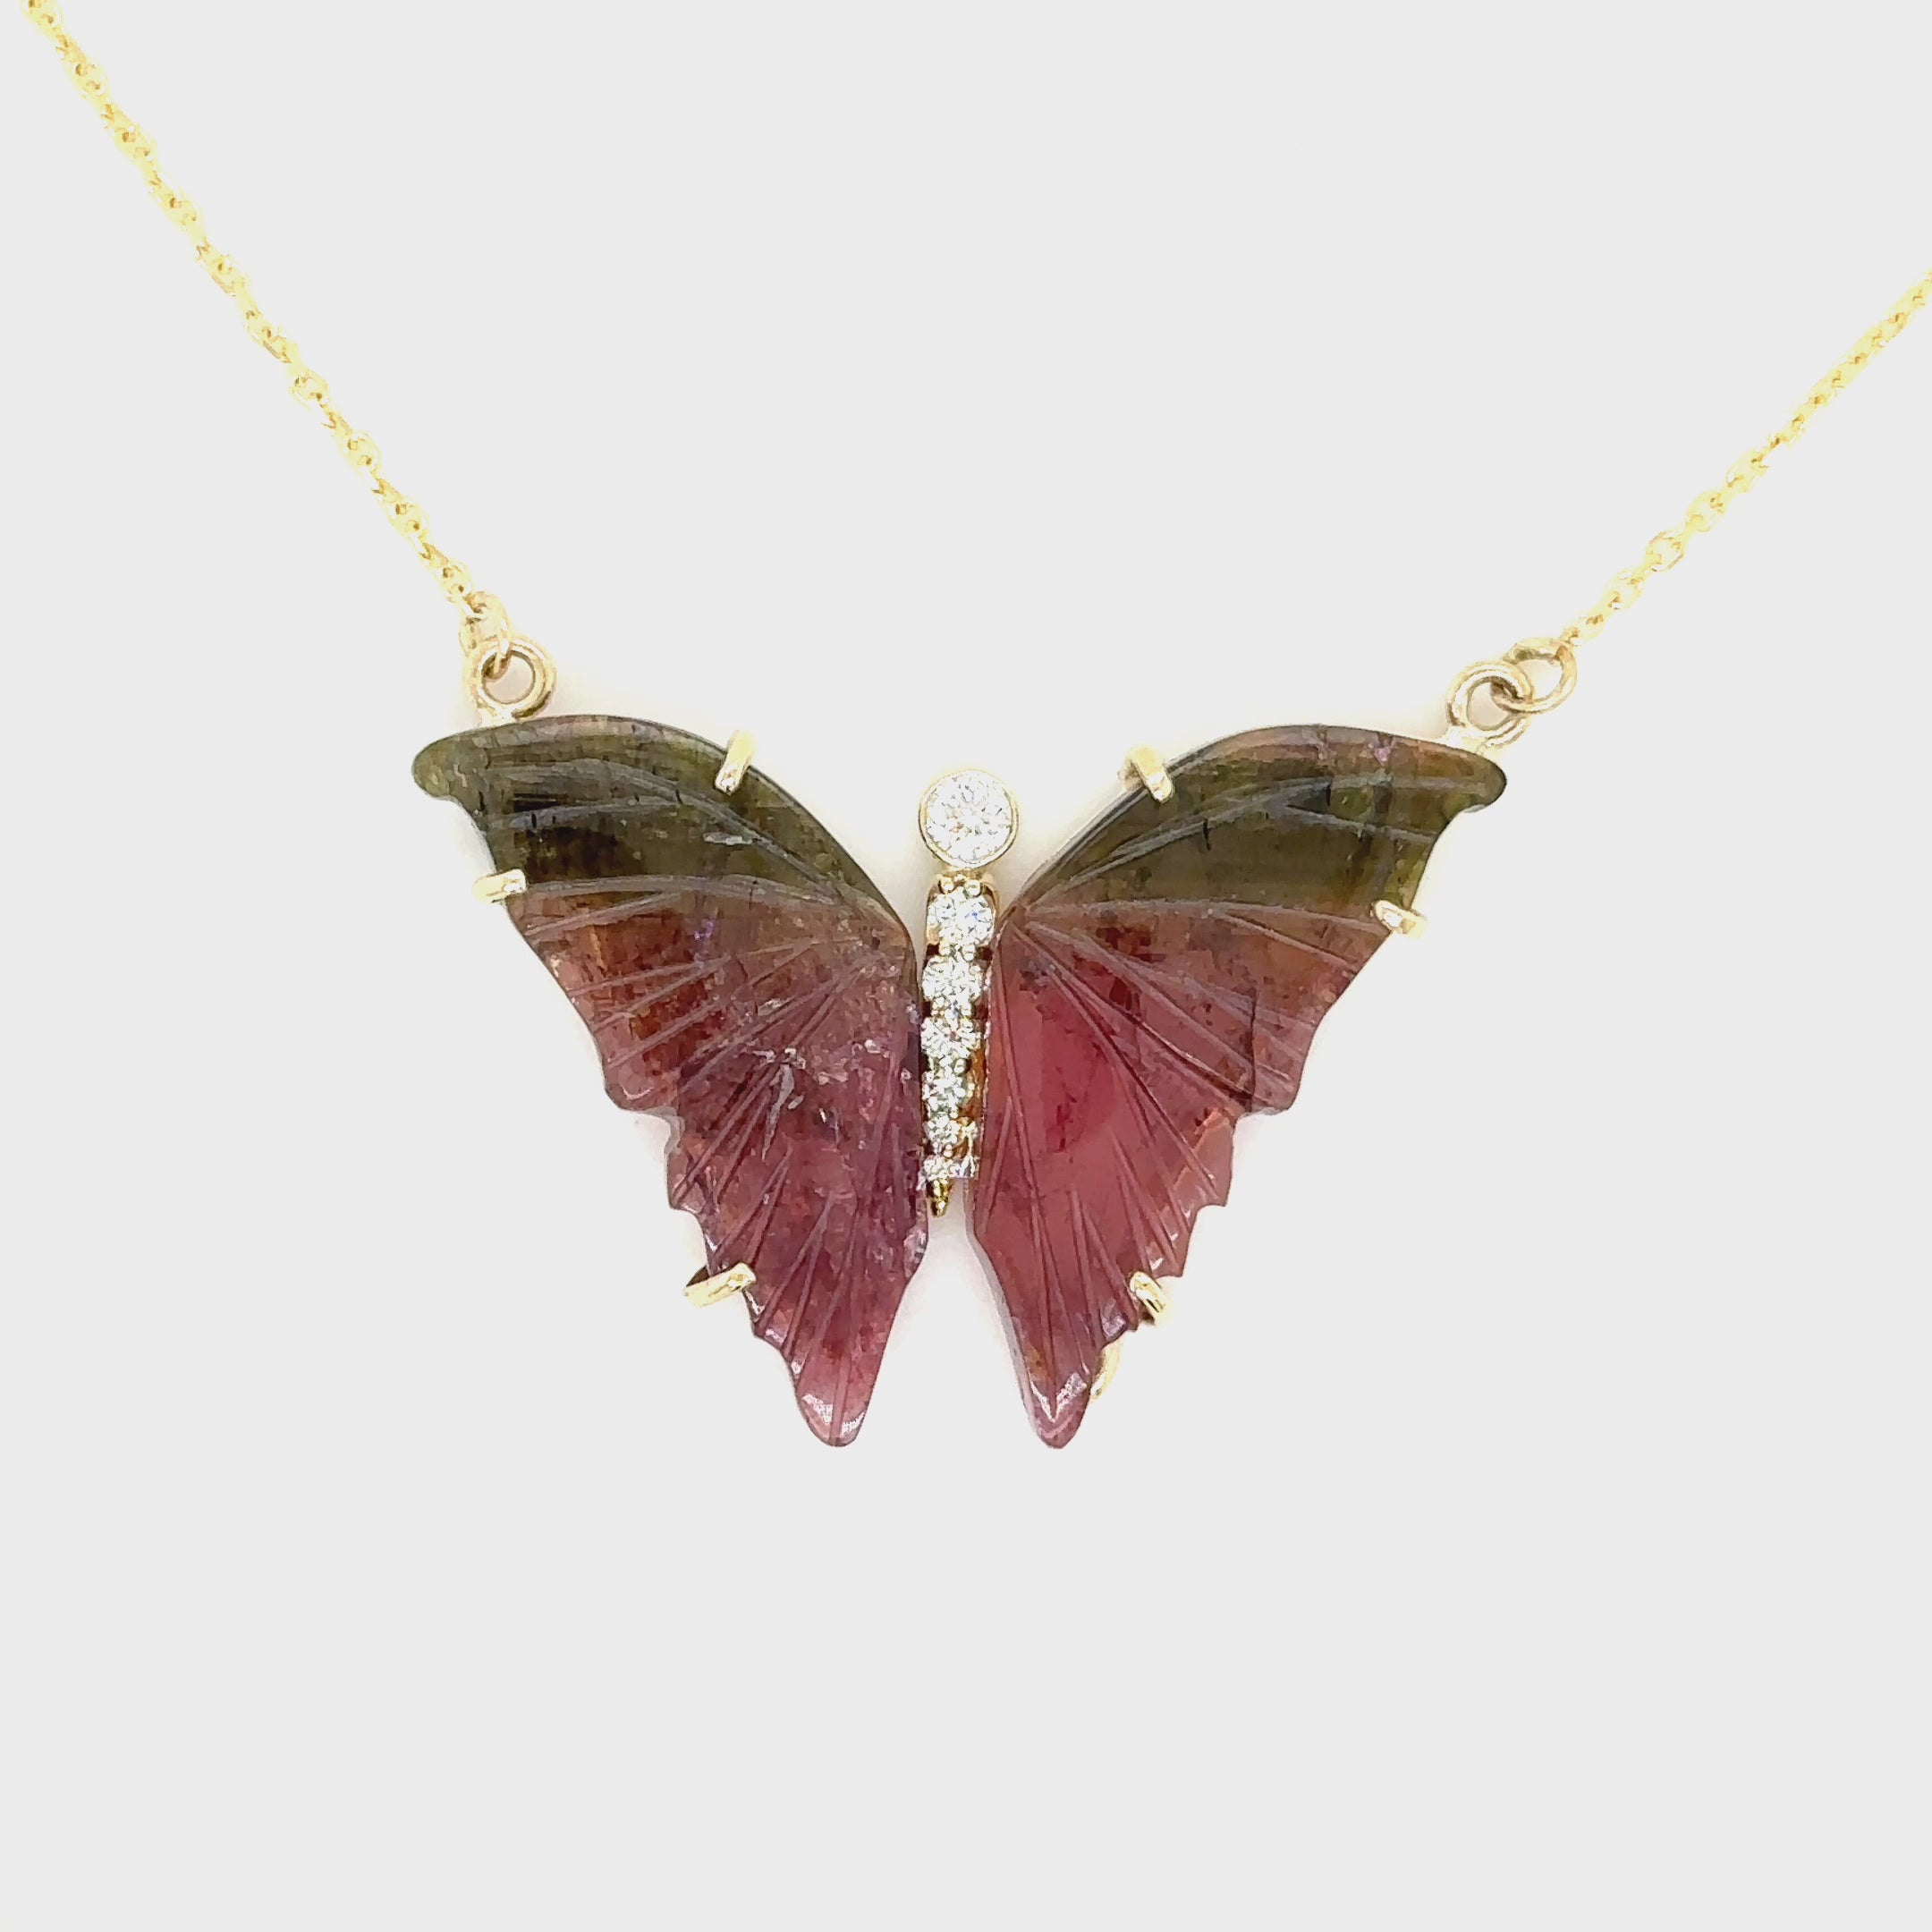 LARGE BUTTERFLY PENDANT ZIRCON STONES NECKLACE | Butterfly pendant, Fine  jewelry, Pendant